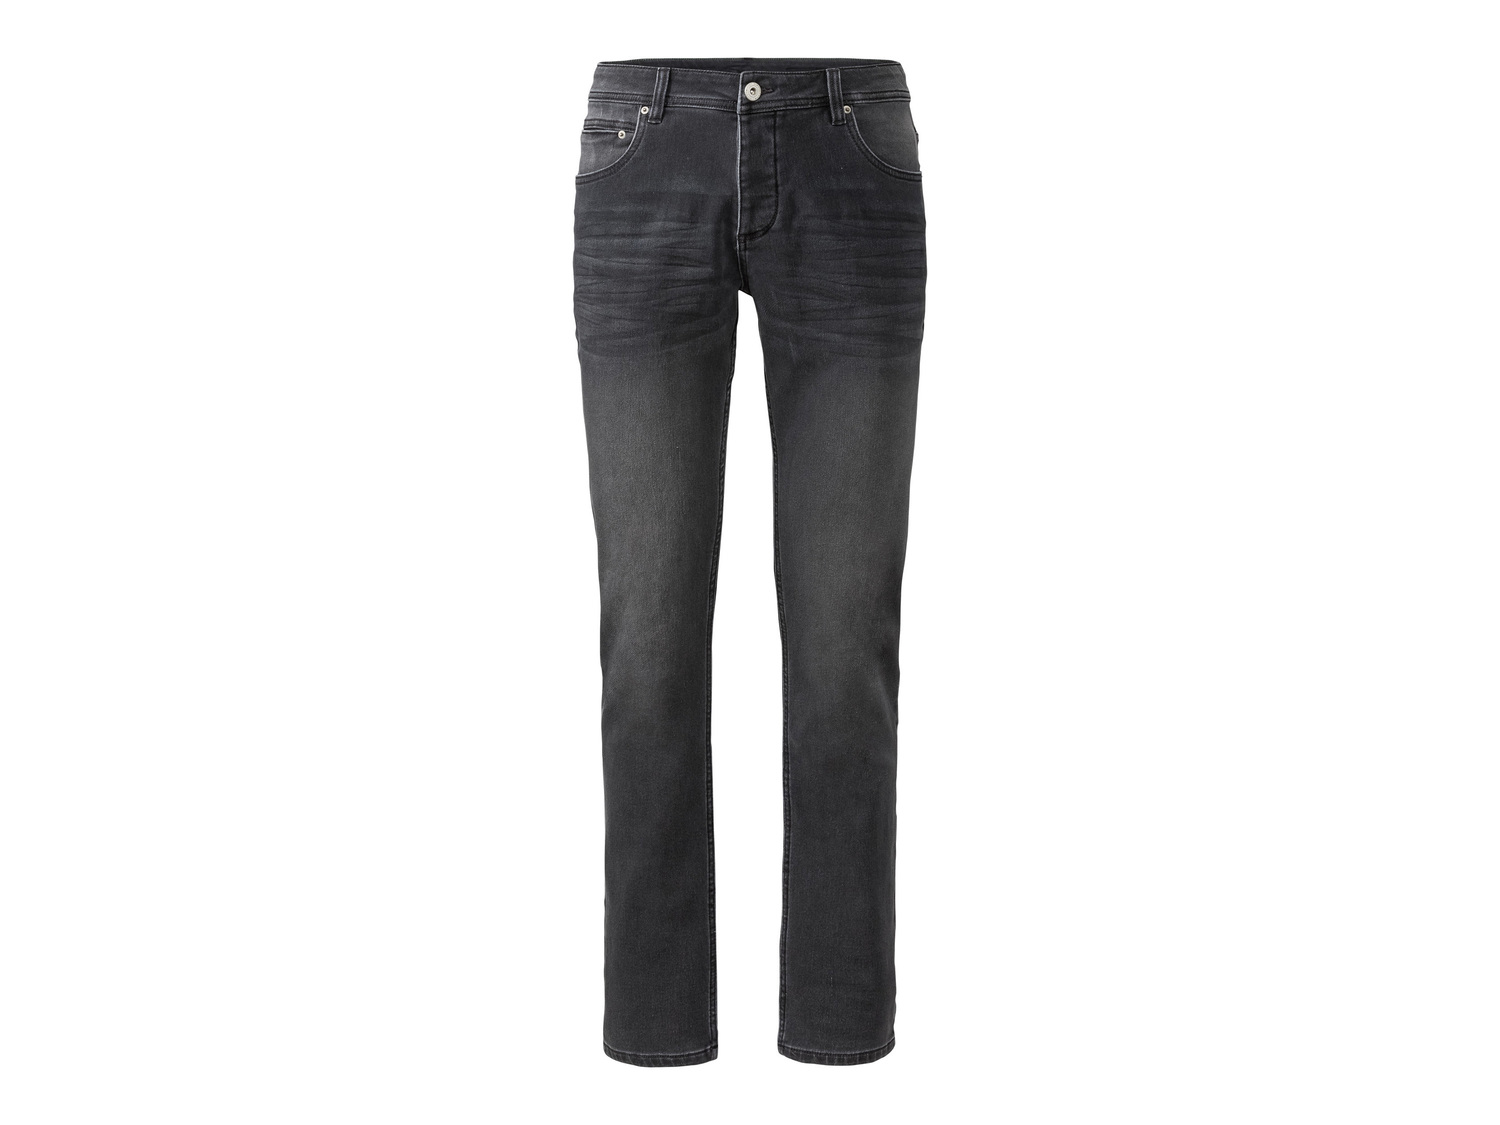 Jeans Slim Fit da uomo Livergy, prezzo 11.99 &#8364;  
Misure: 46-56
- Oeko tex NEW